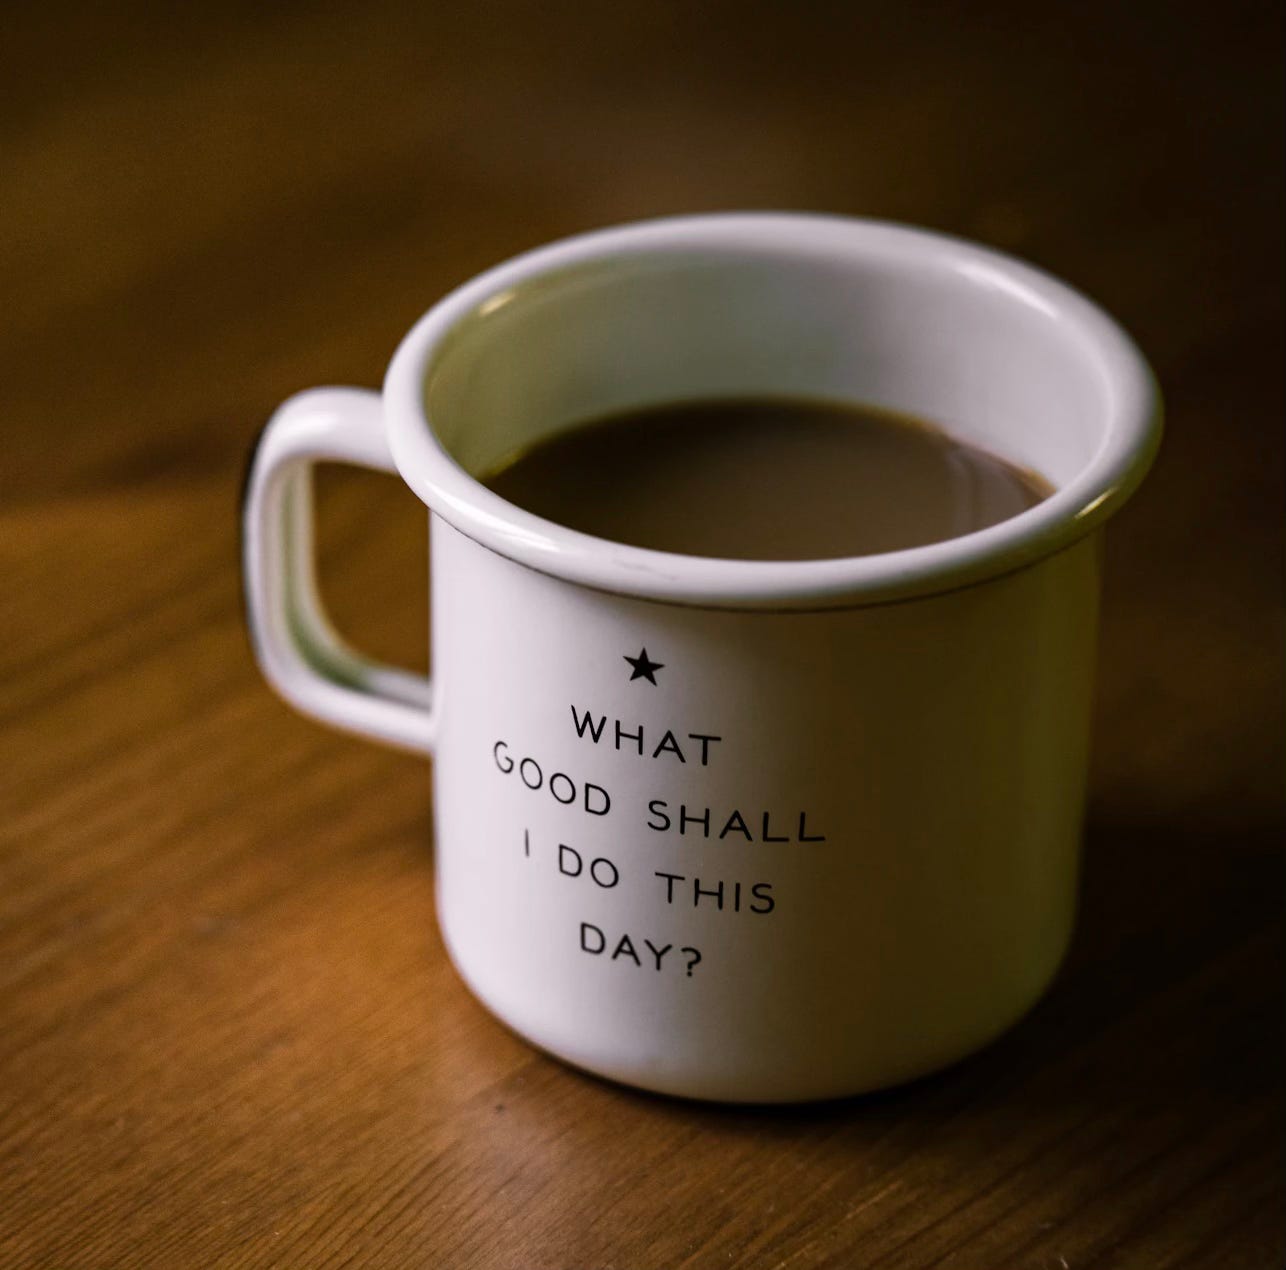 Coffee mug that says, "What good shall I do this day?"